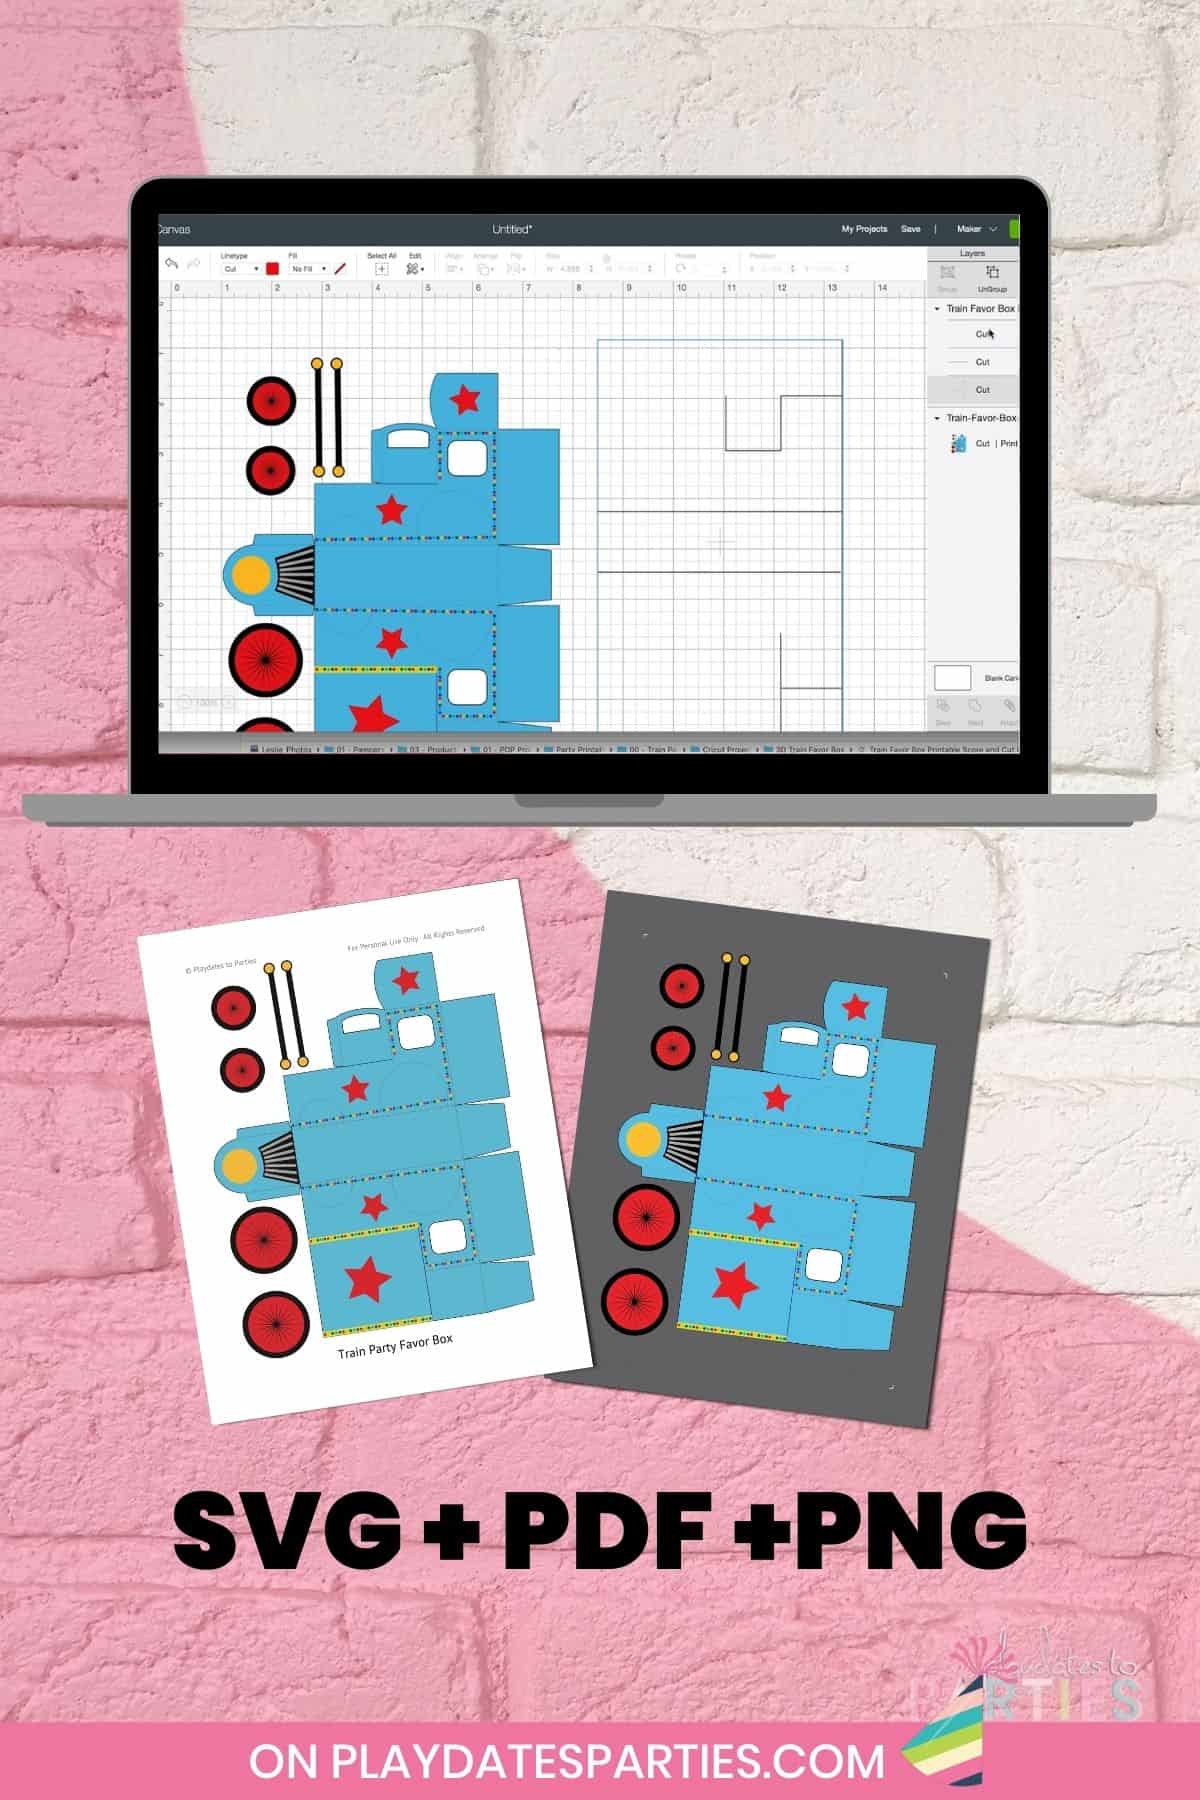 Train Party Favor Box (SVG + PDF pattern for DIY 3D train box)